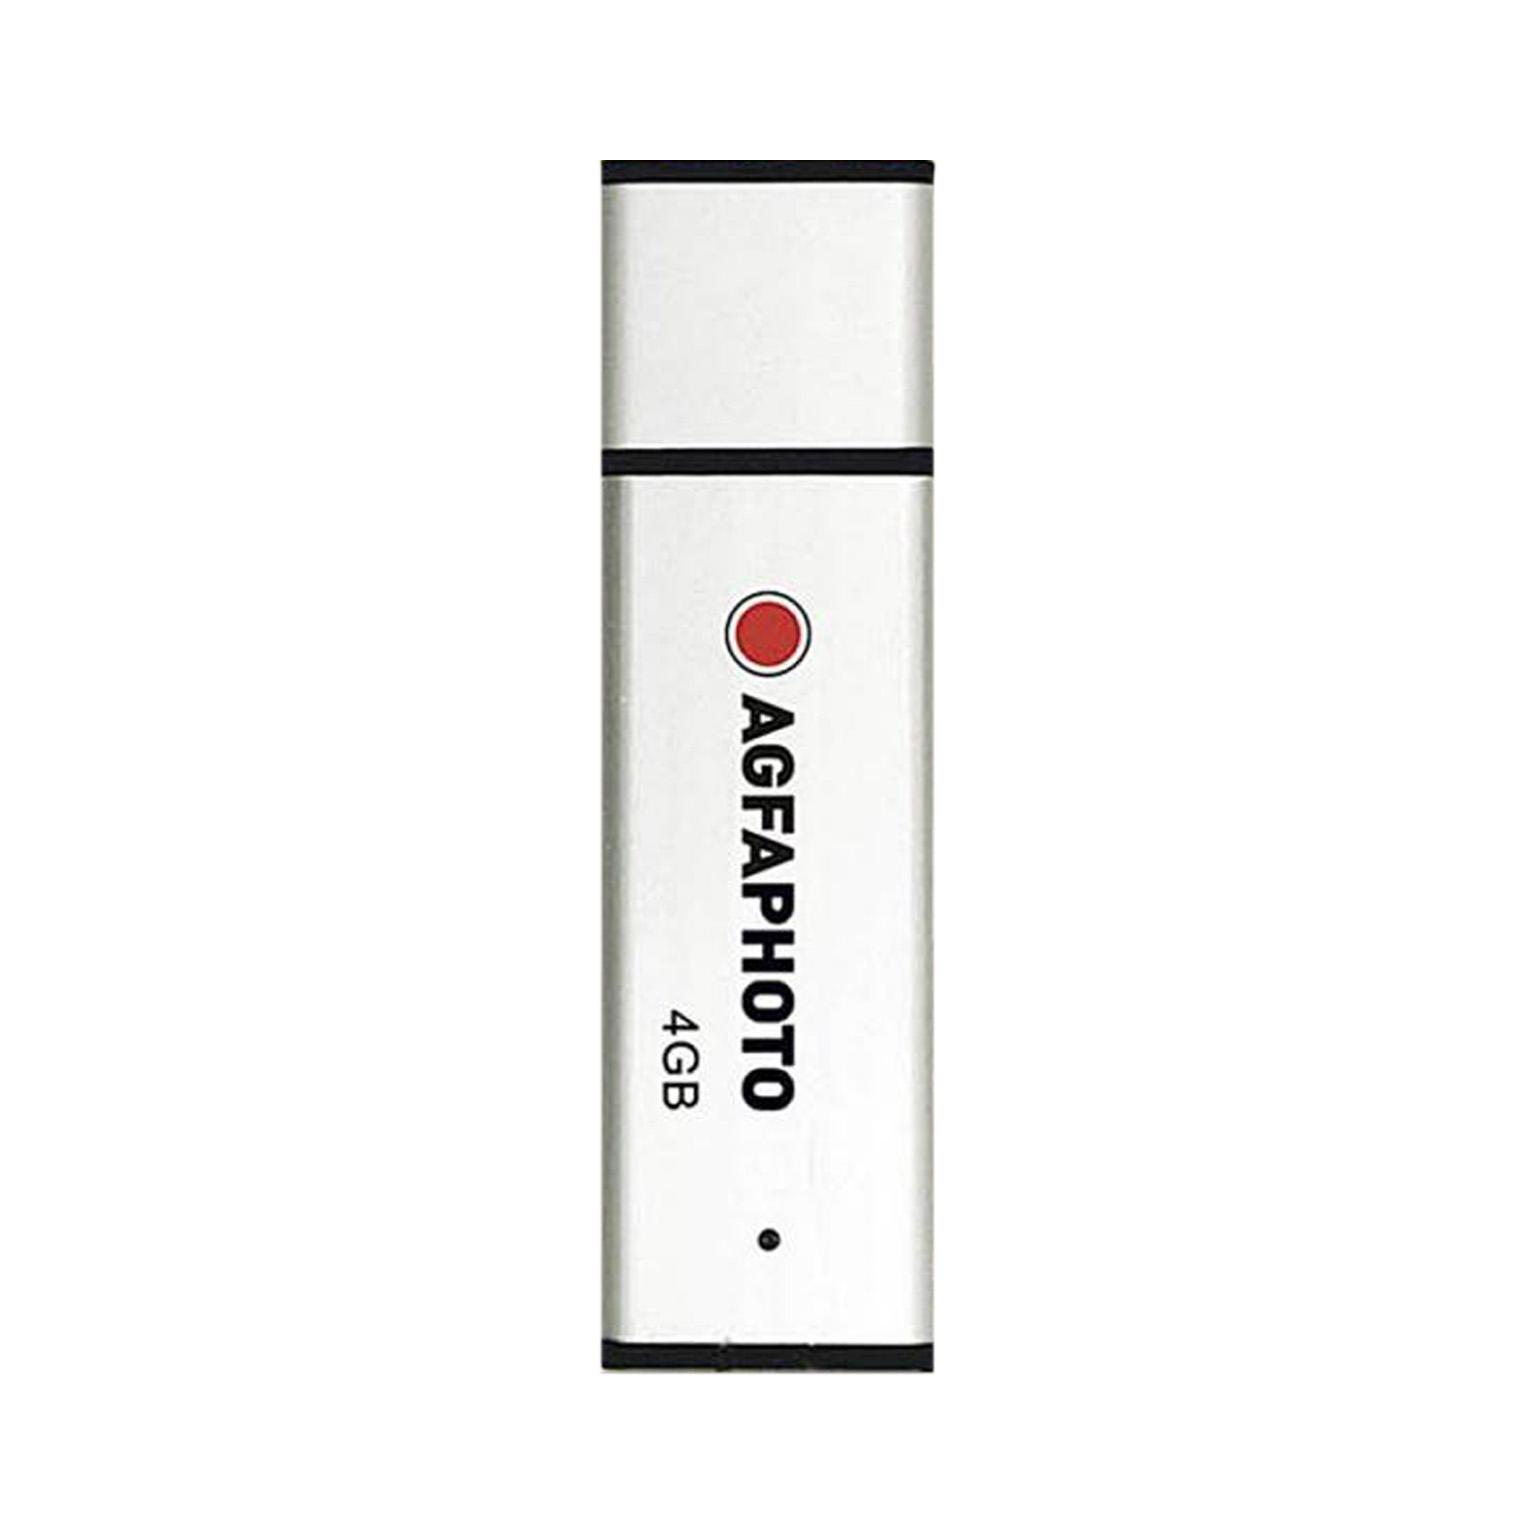 USB 2.0 stick - 4 GB - AgfaPhoto